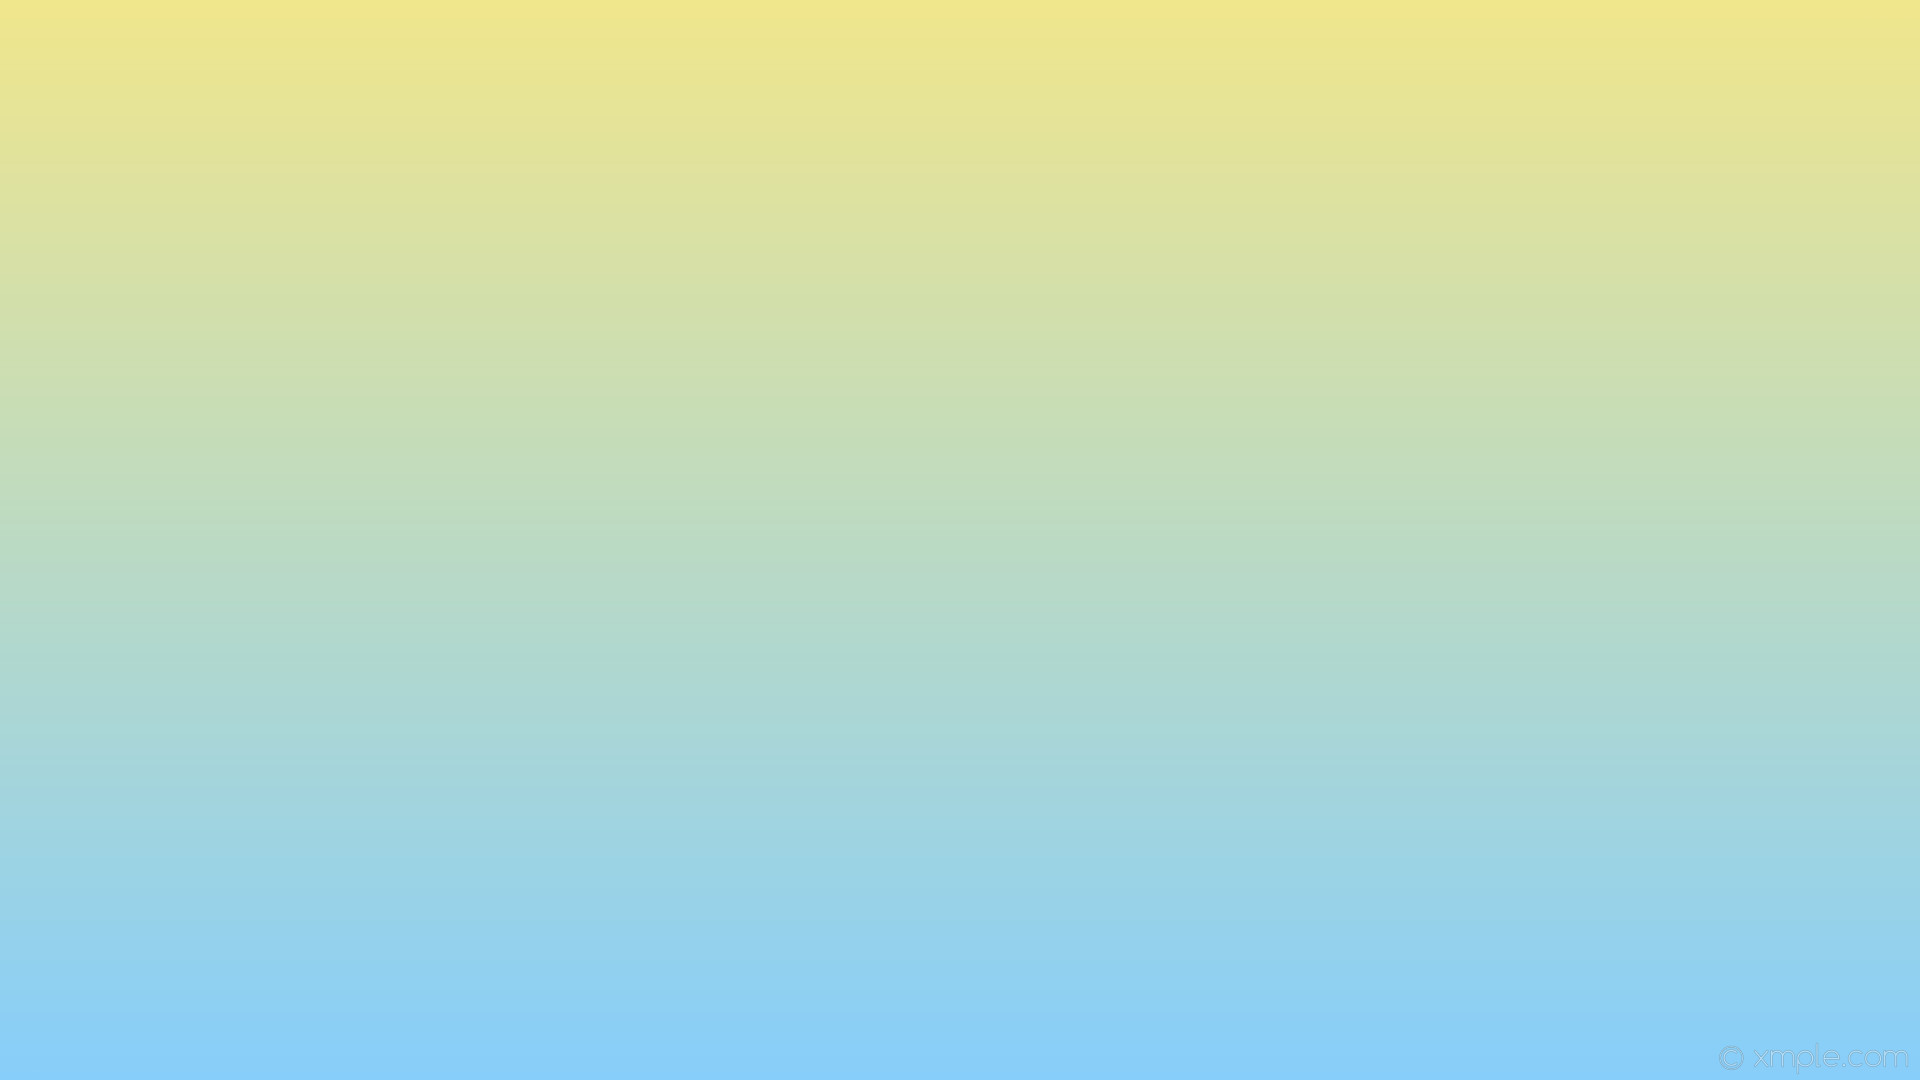 wallpaper blue gradient yellow linear light sky blue khaki #87cefa #f0e68c  270Â°